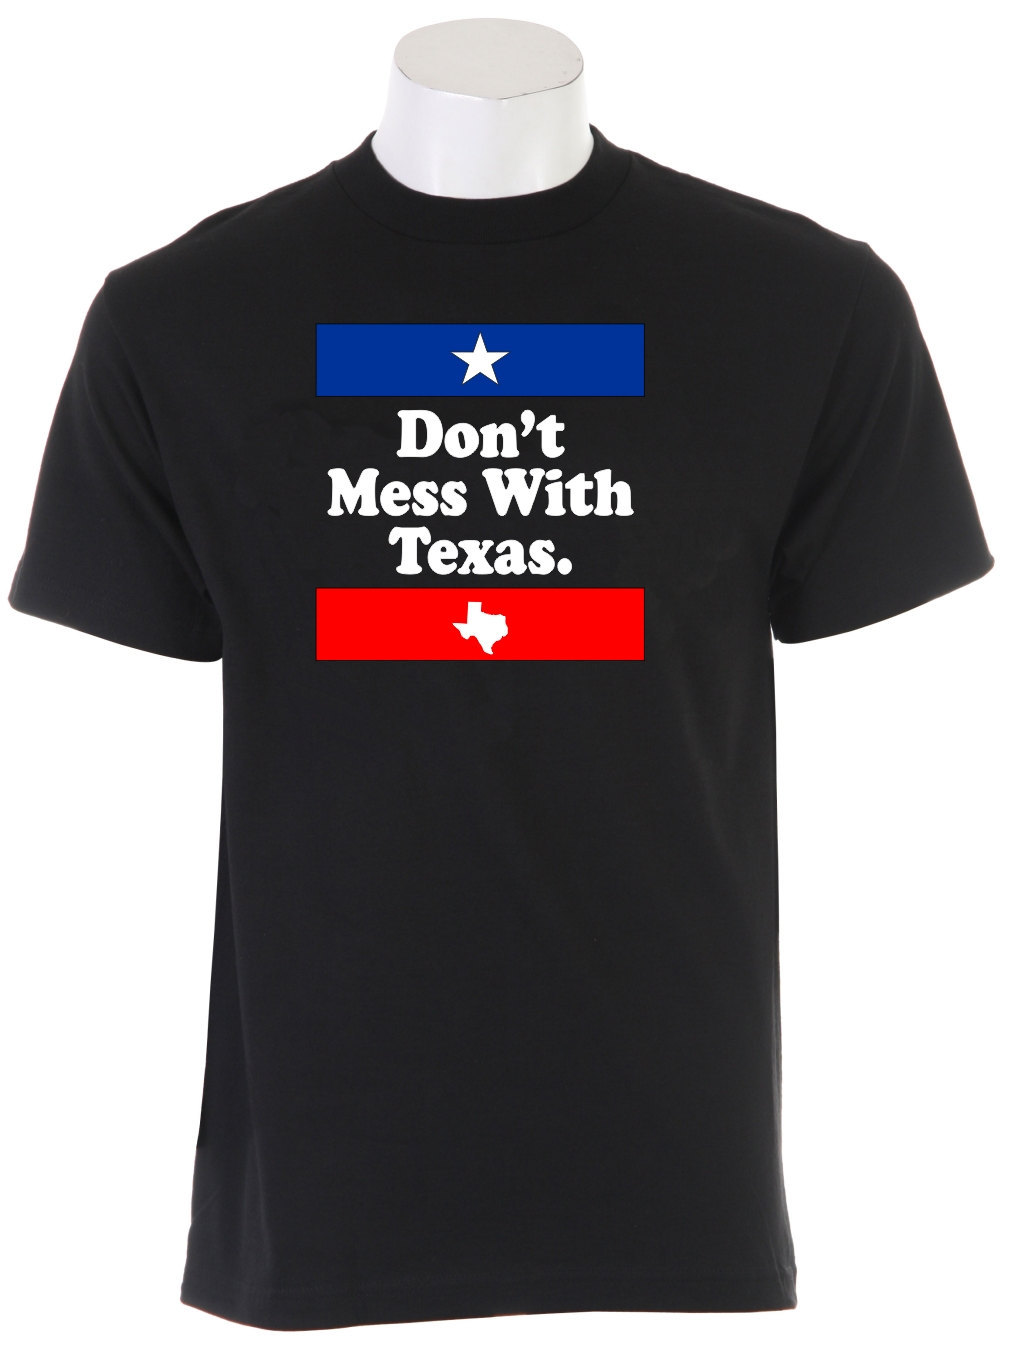 Texas shirt Don't mess with Texas t shirt 1980's tshirt T-Shirt Tee ...